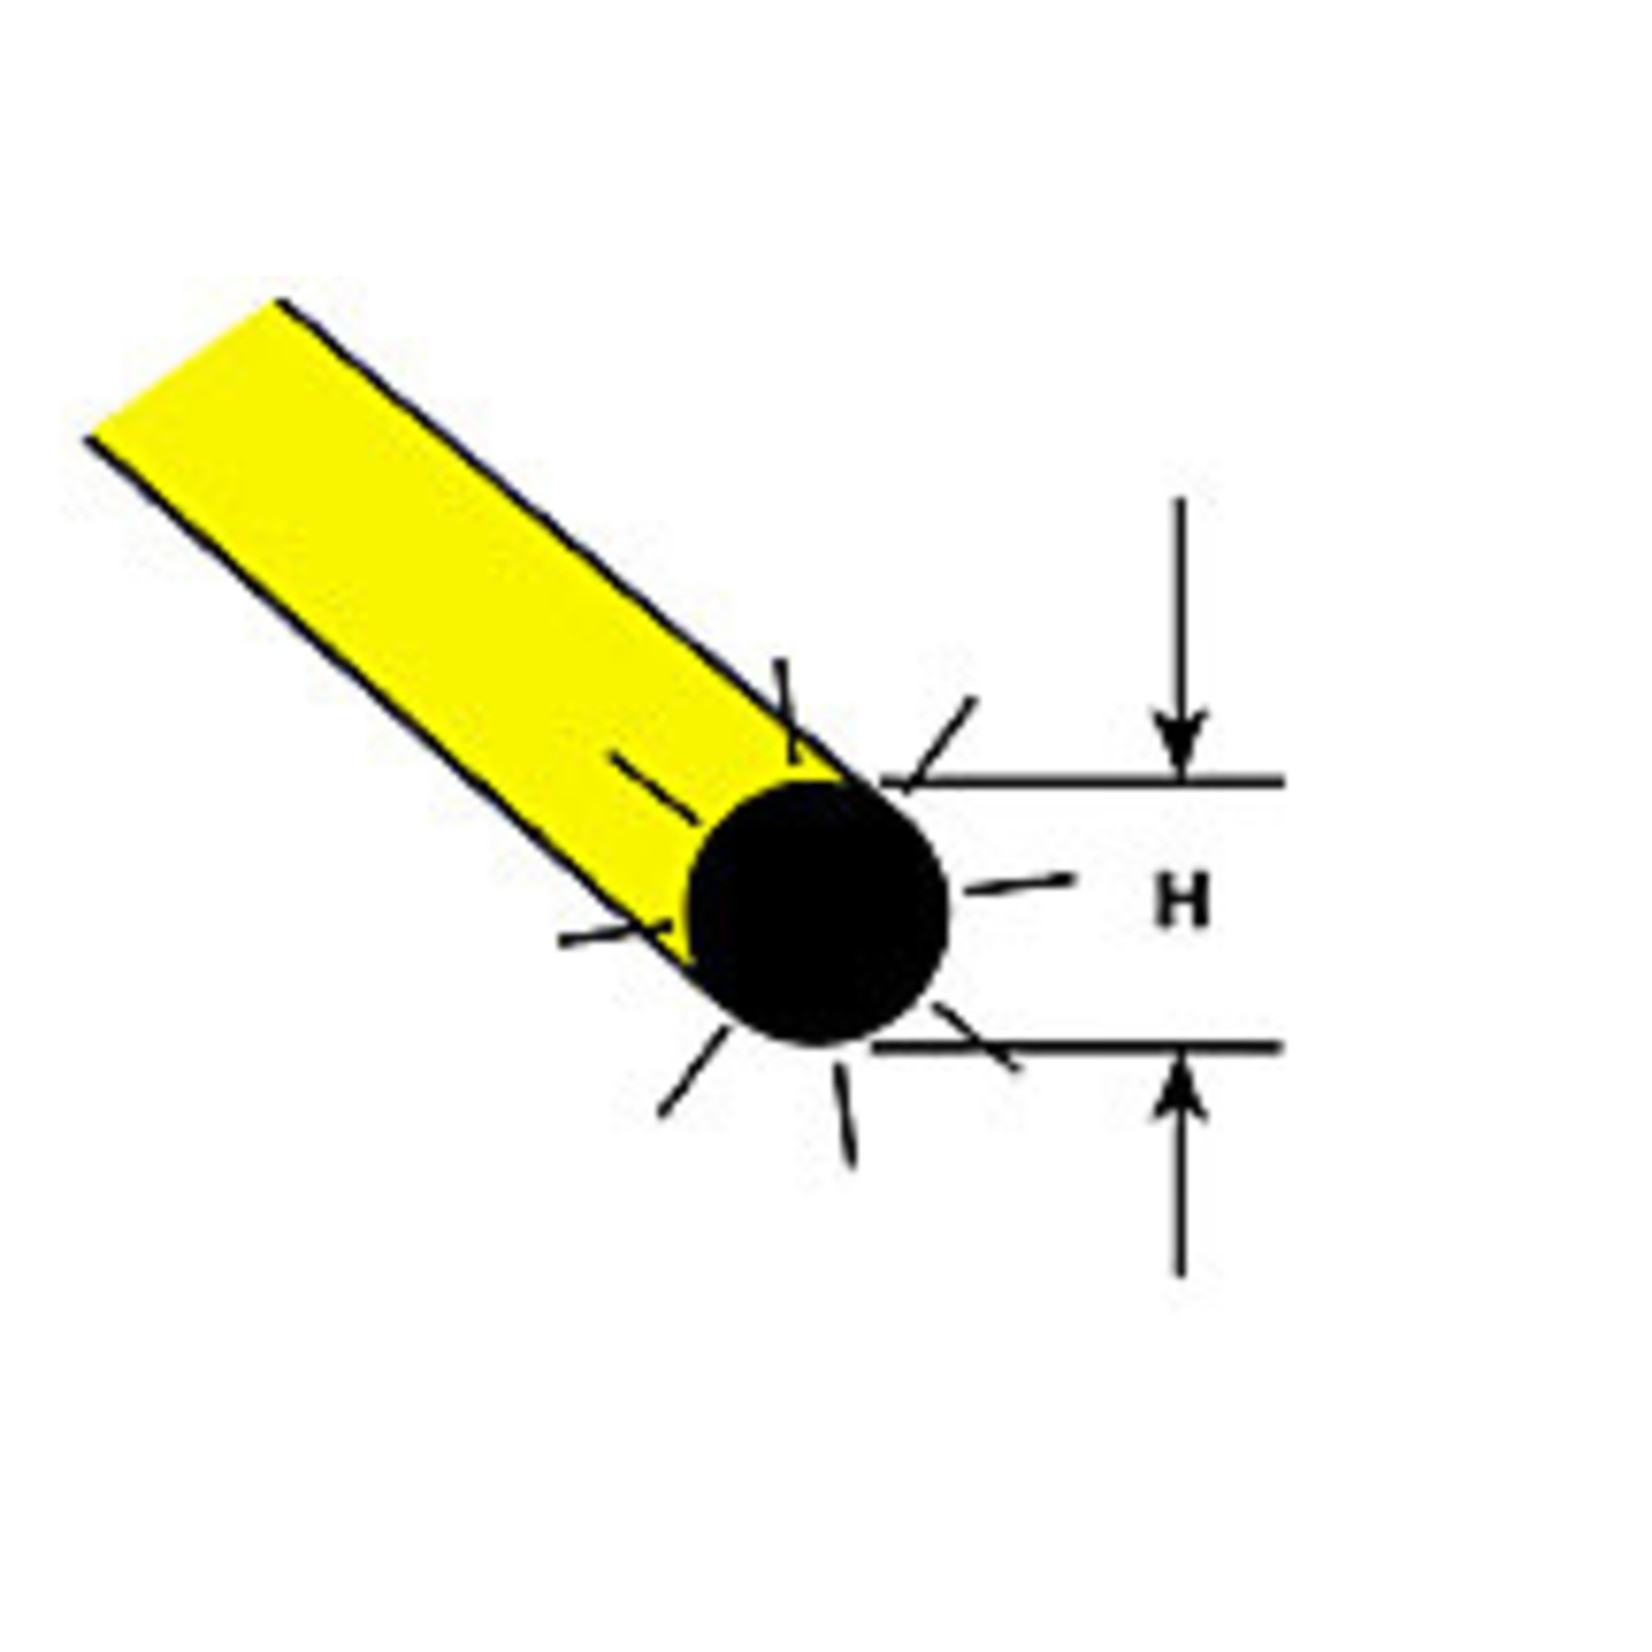 Plastruct PLA90281 Yellow Fluorescent Rod